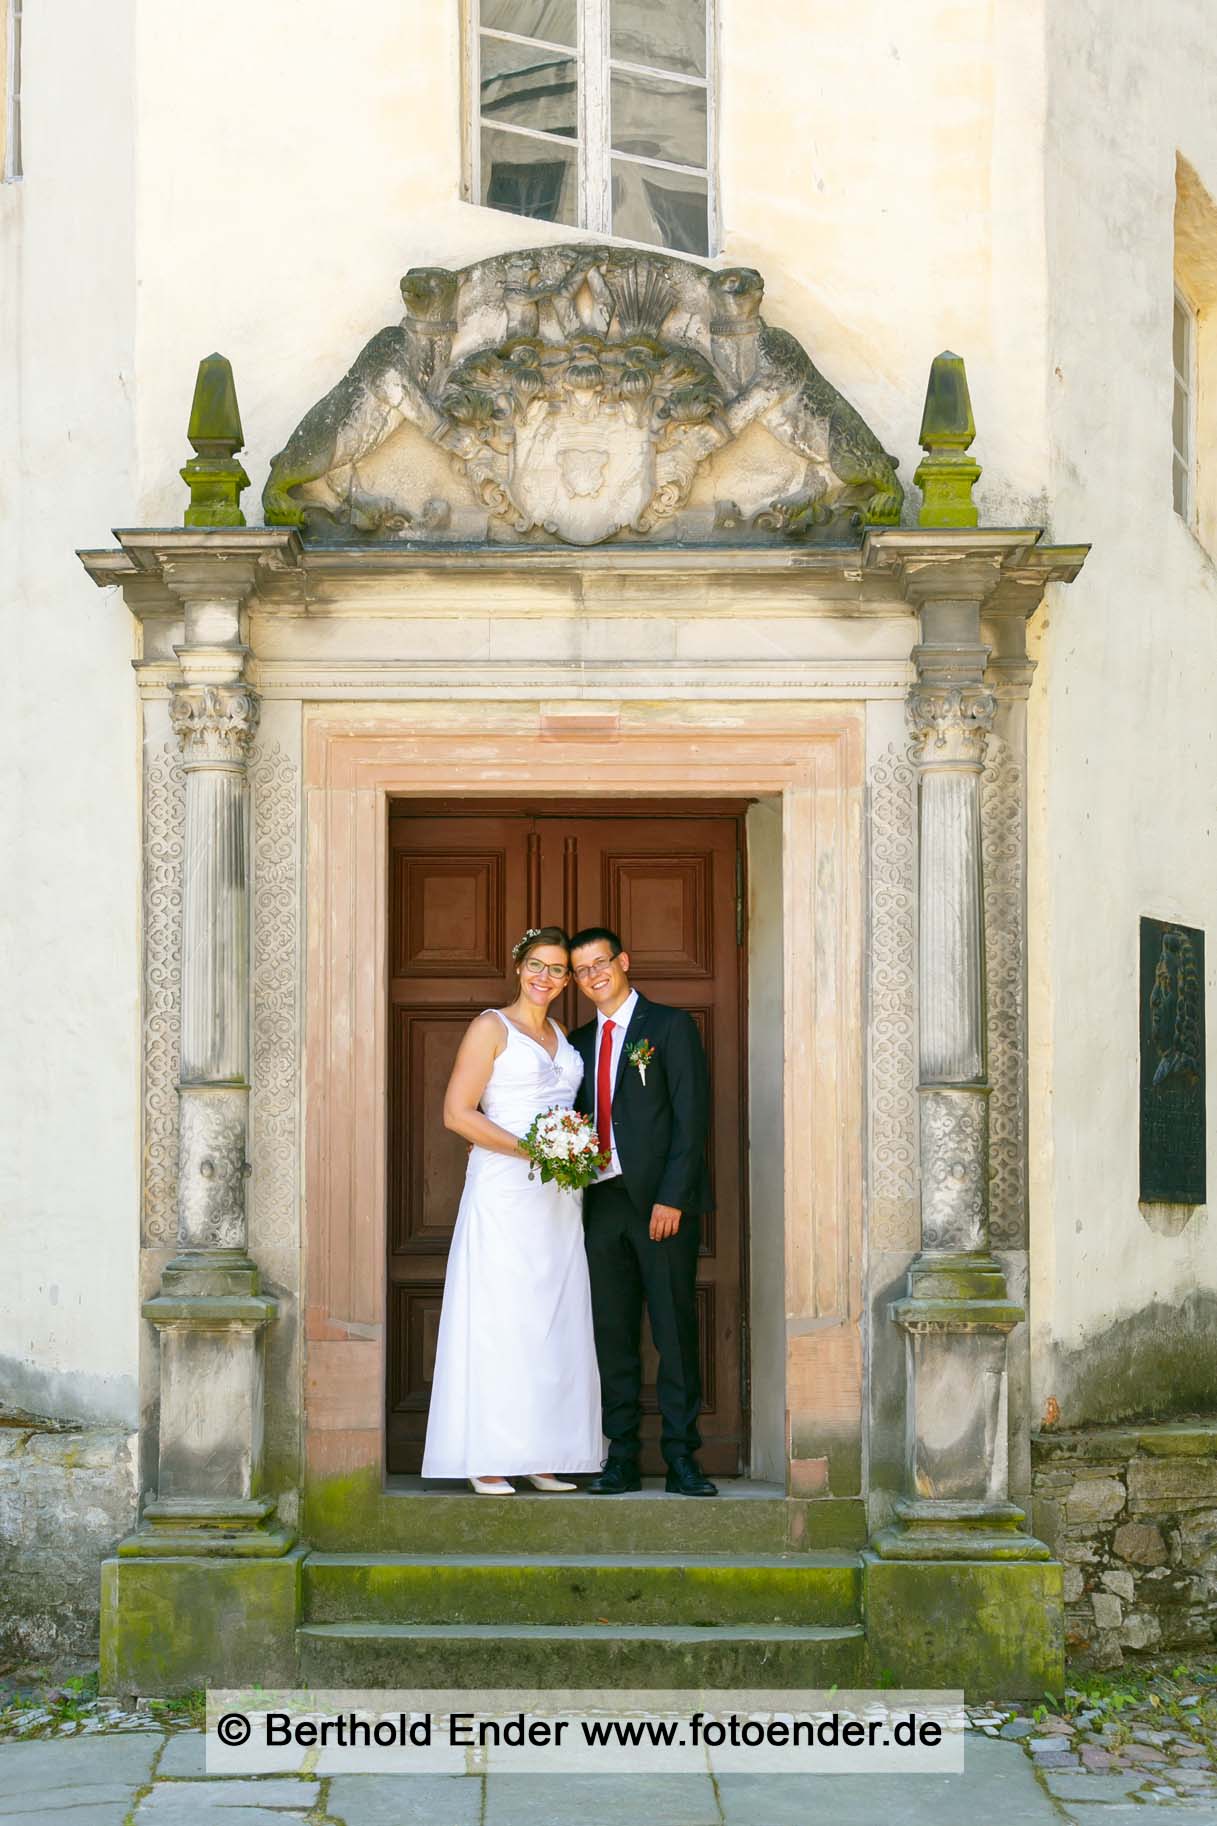 Heiraten in der Schlosskapelle Köthen